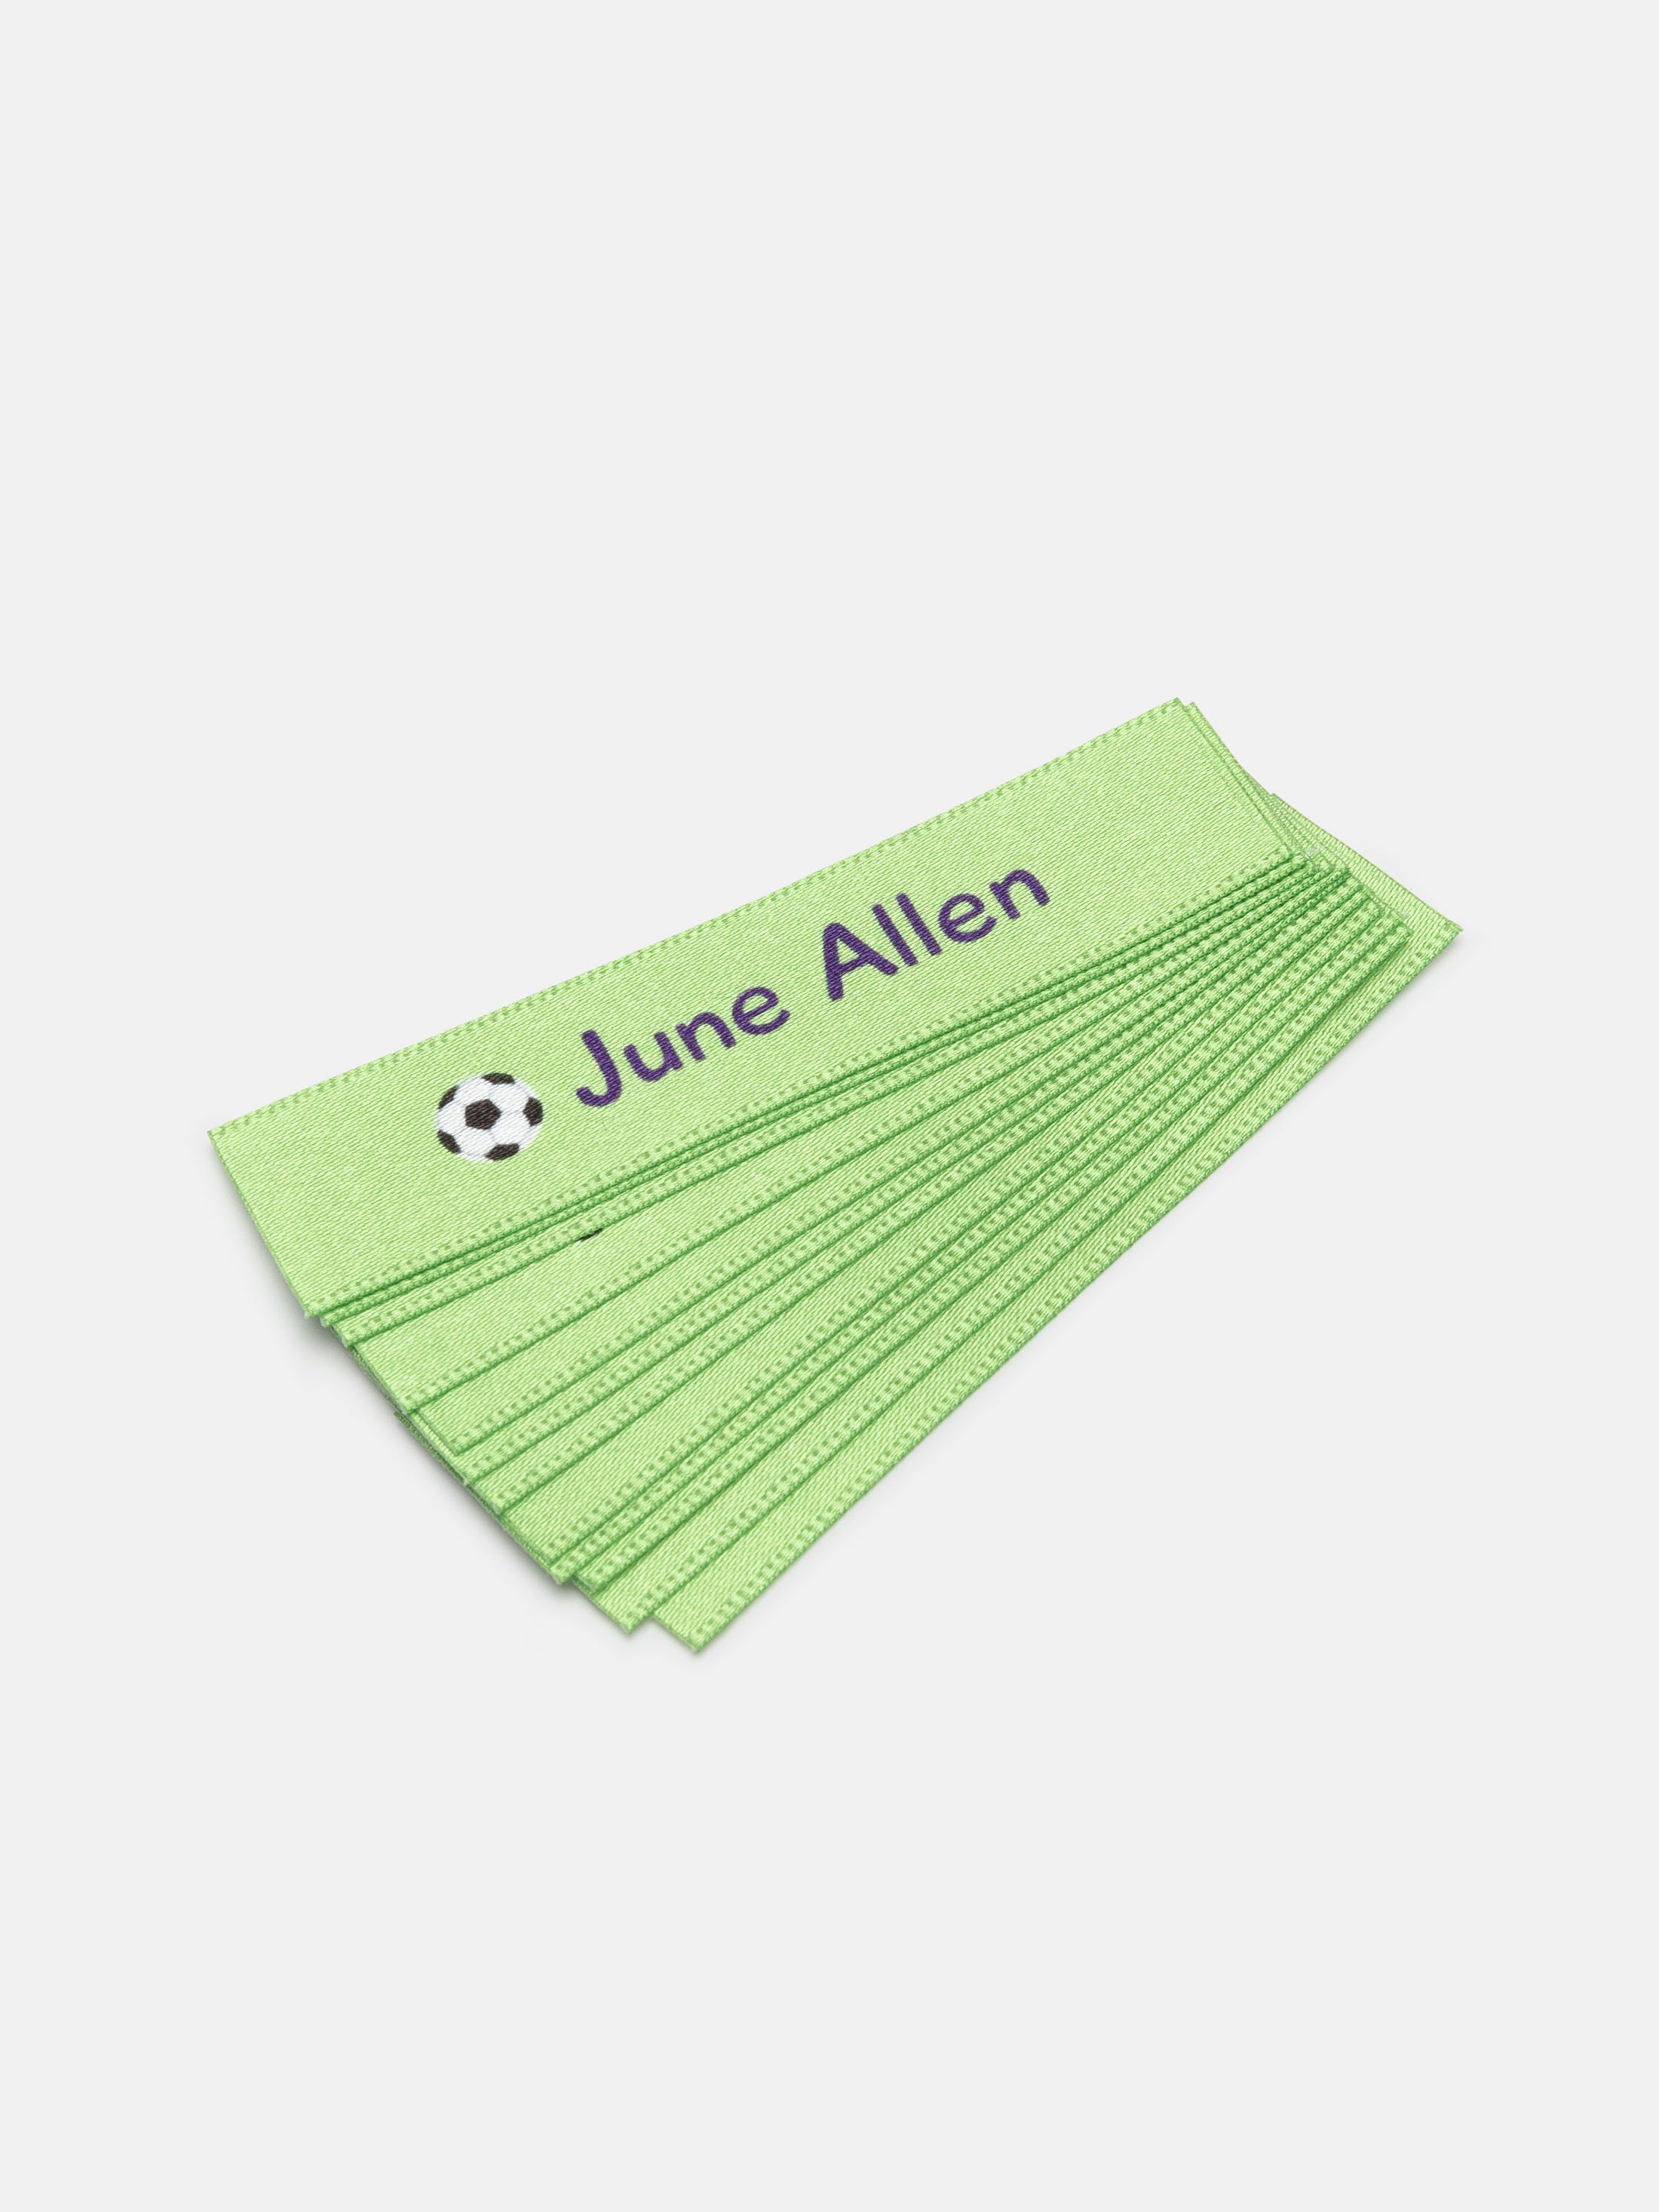 custom fabric name tags pack